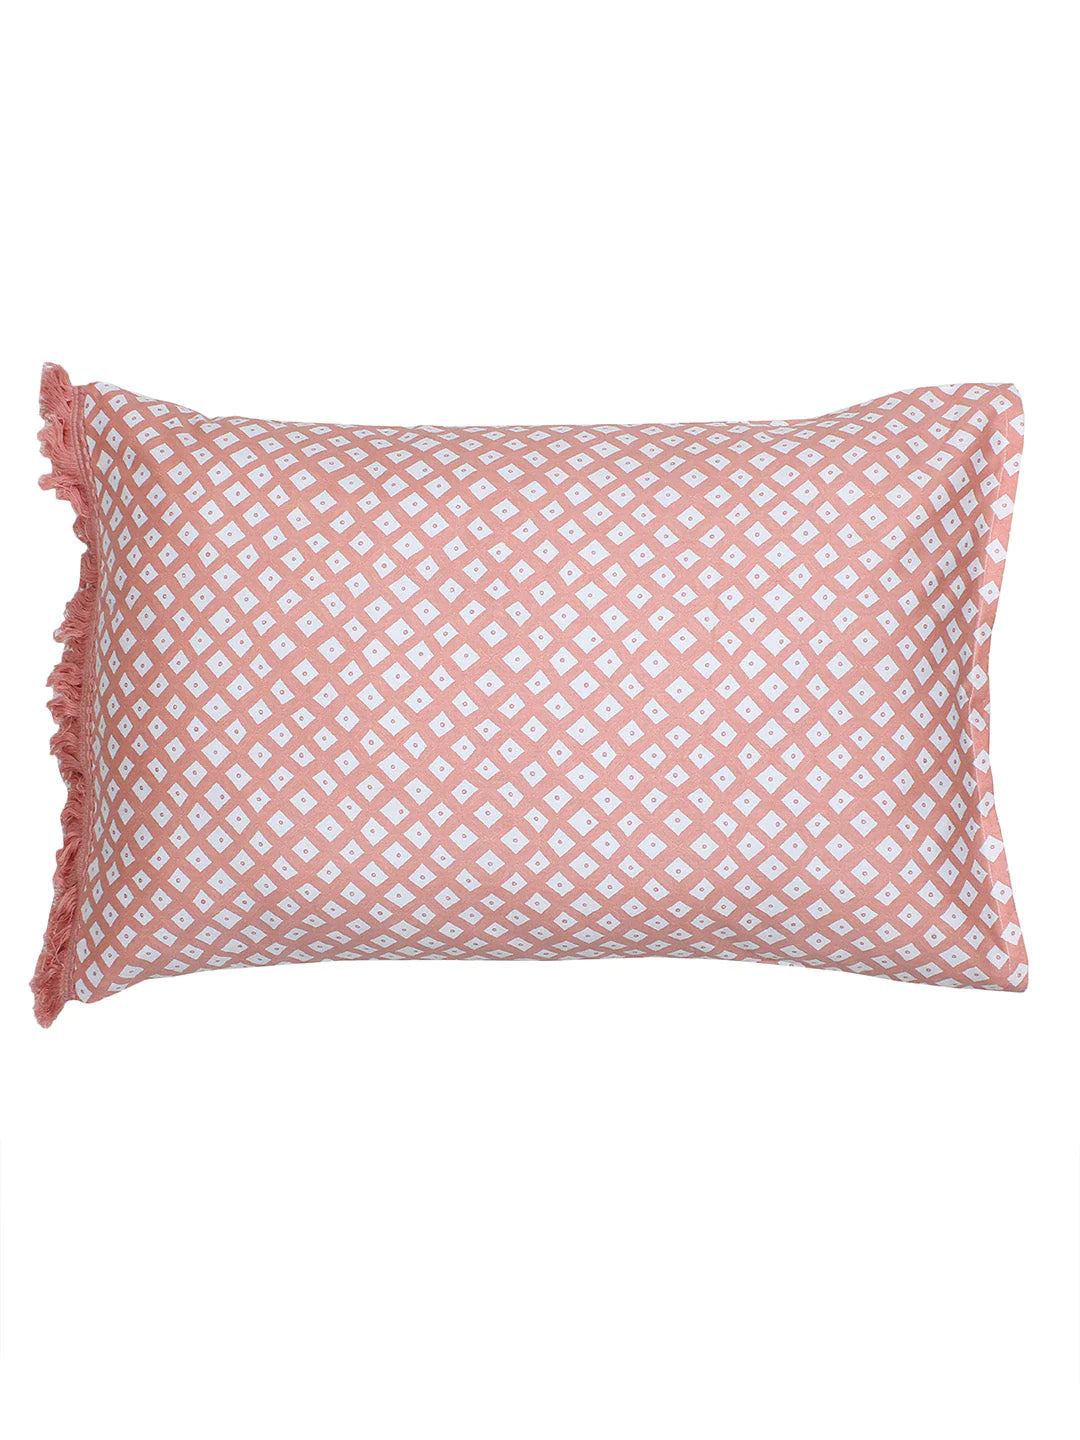 Leheriya Pink Pillow Cover